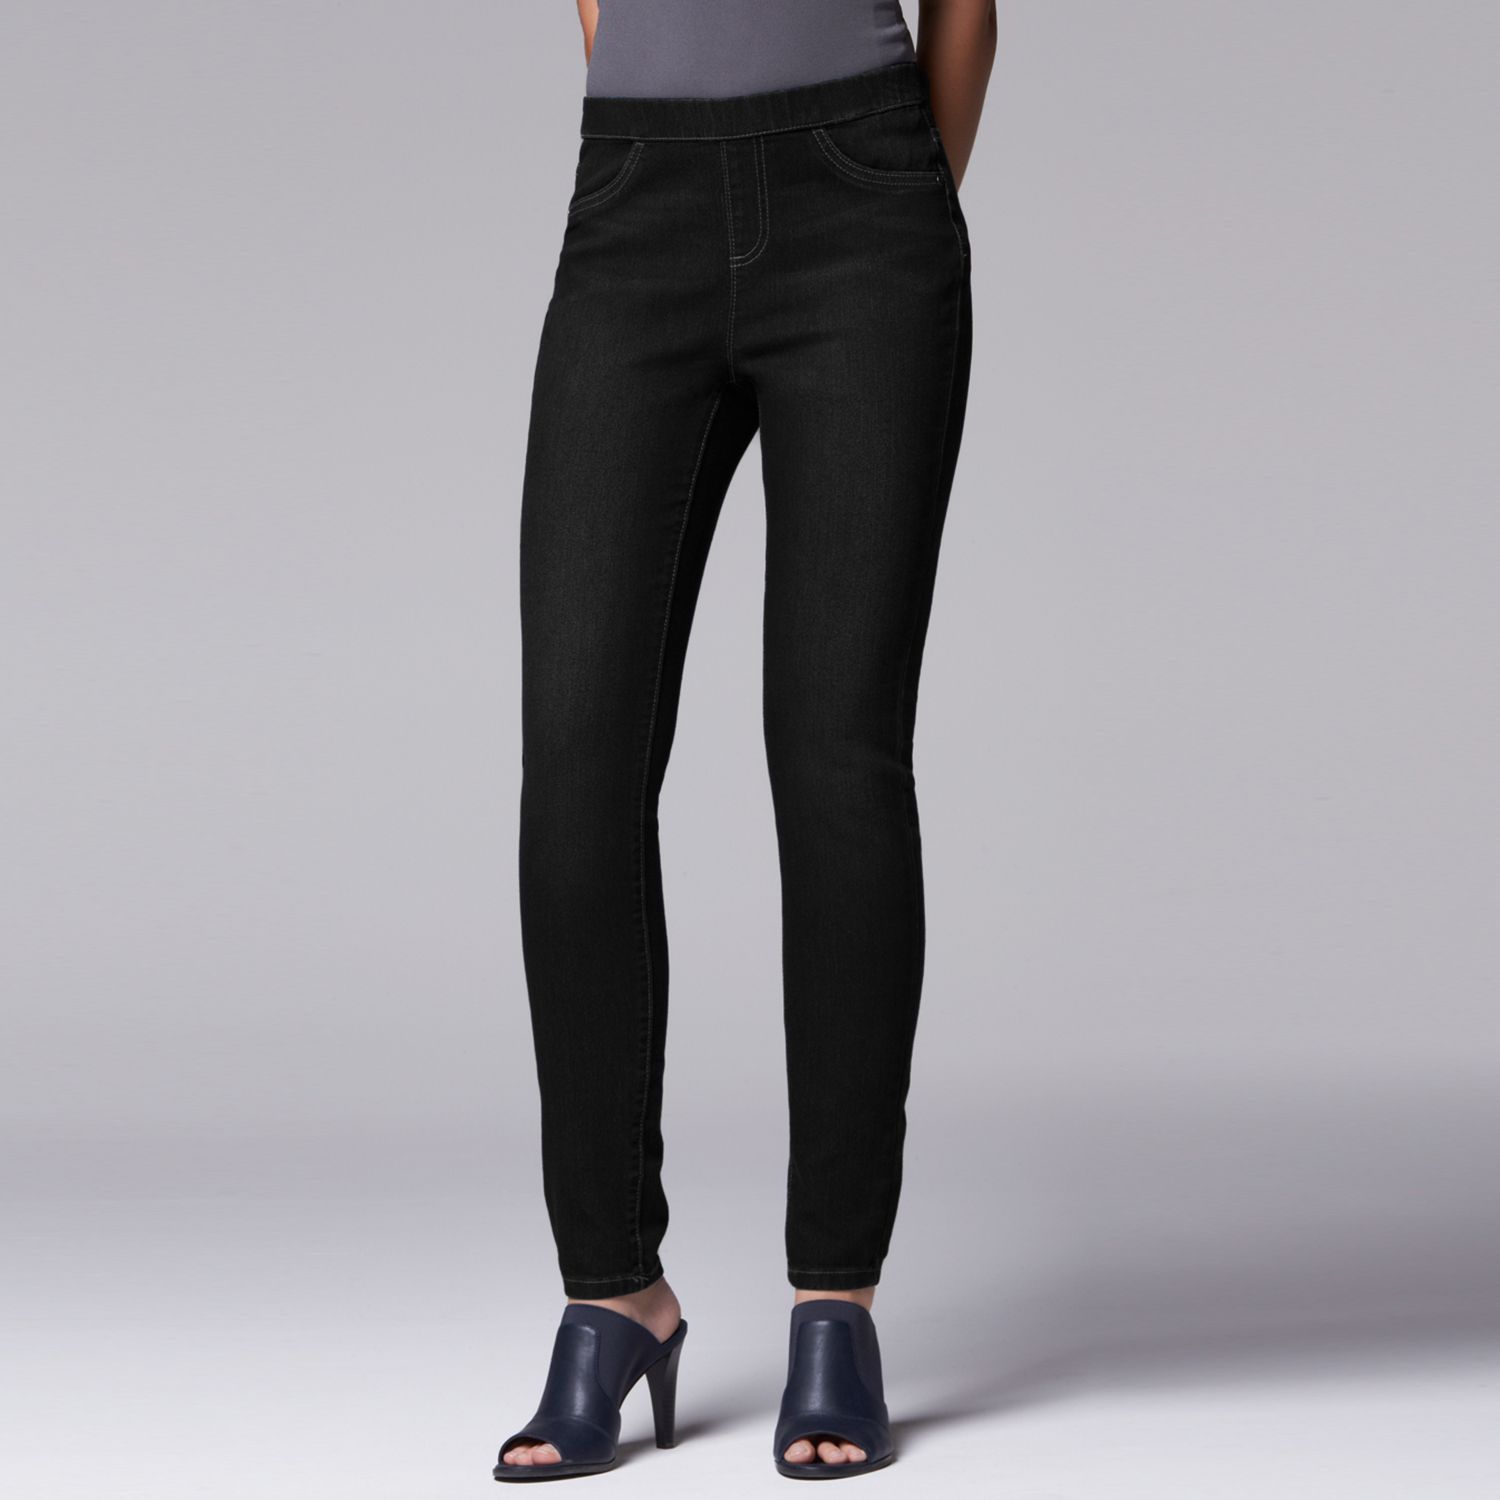 levi's 511 slim fit jeans black